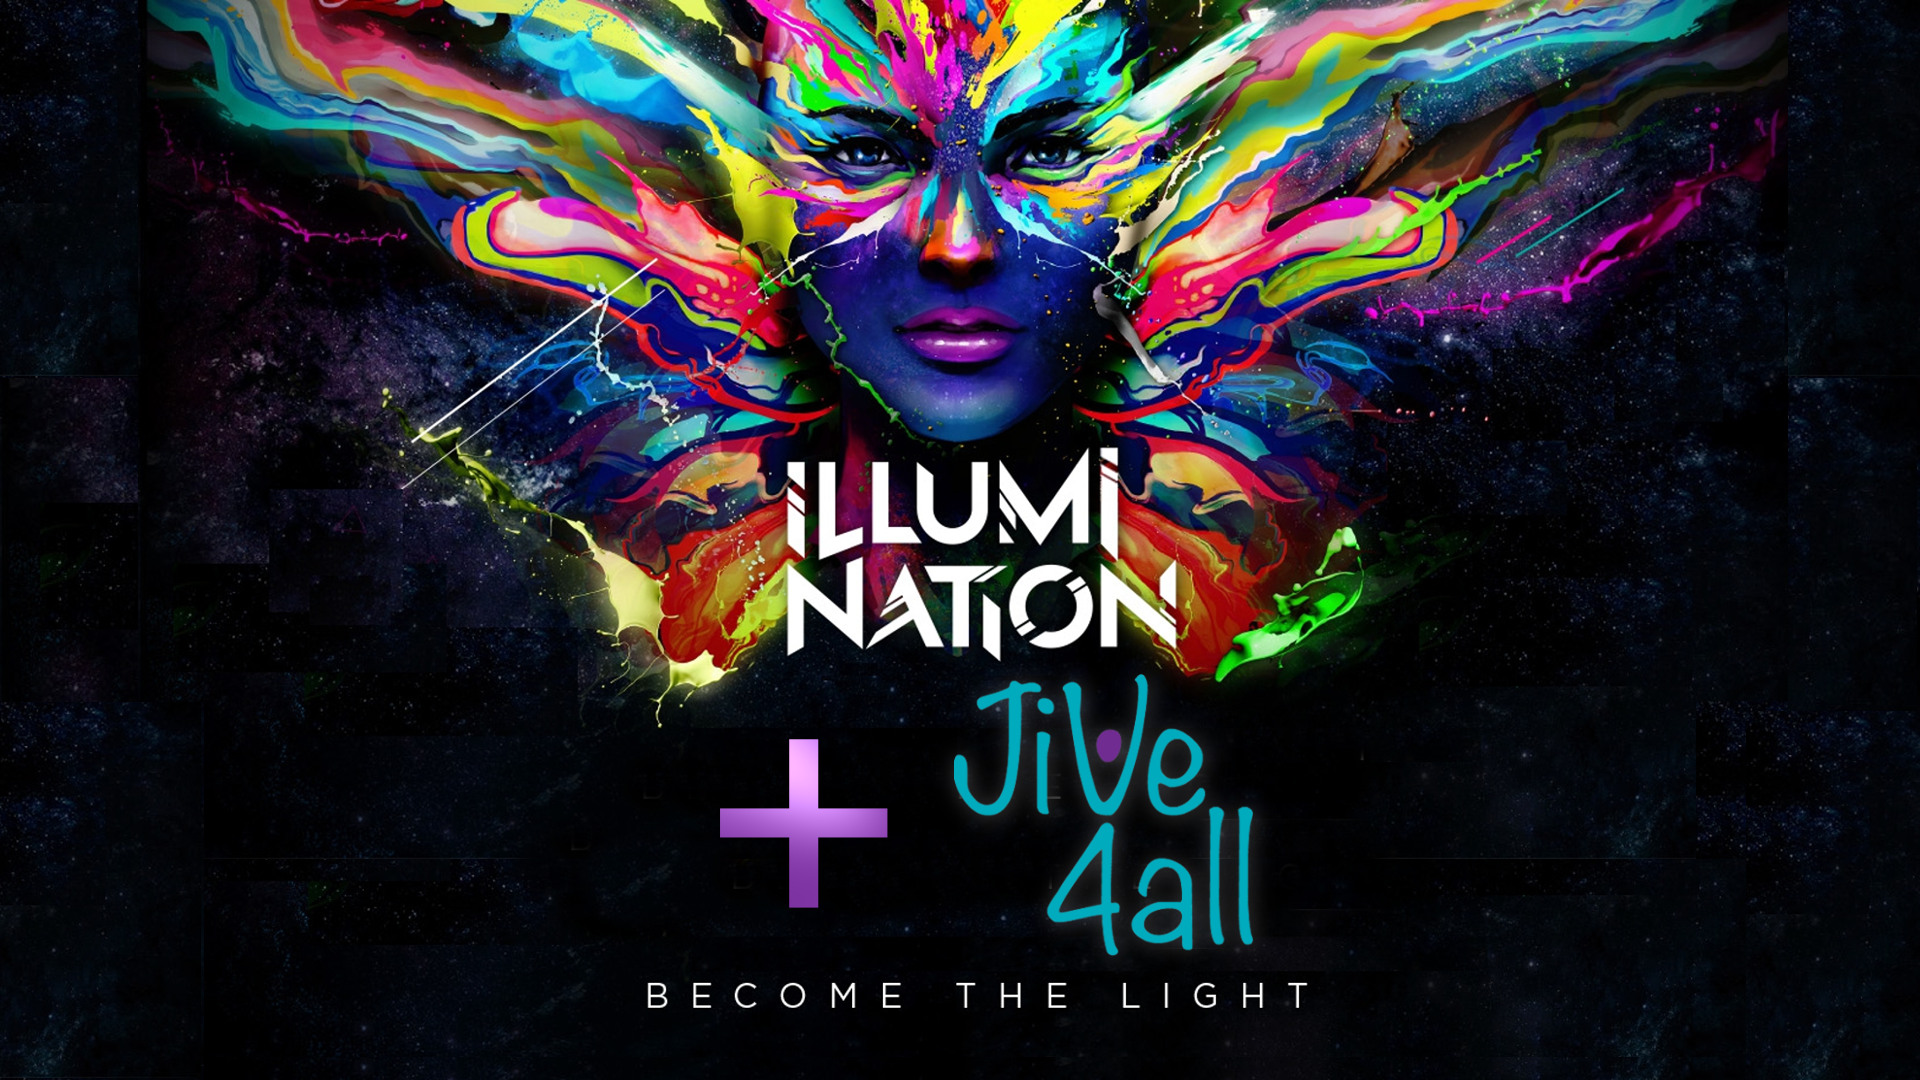 Illumination plus Jive4All two-room freestyle promotional image